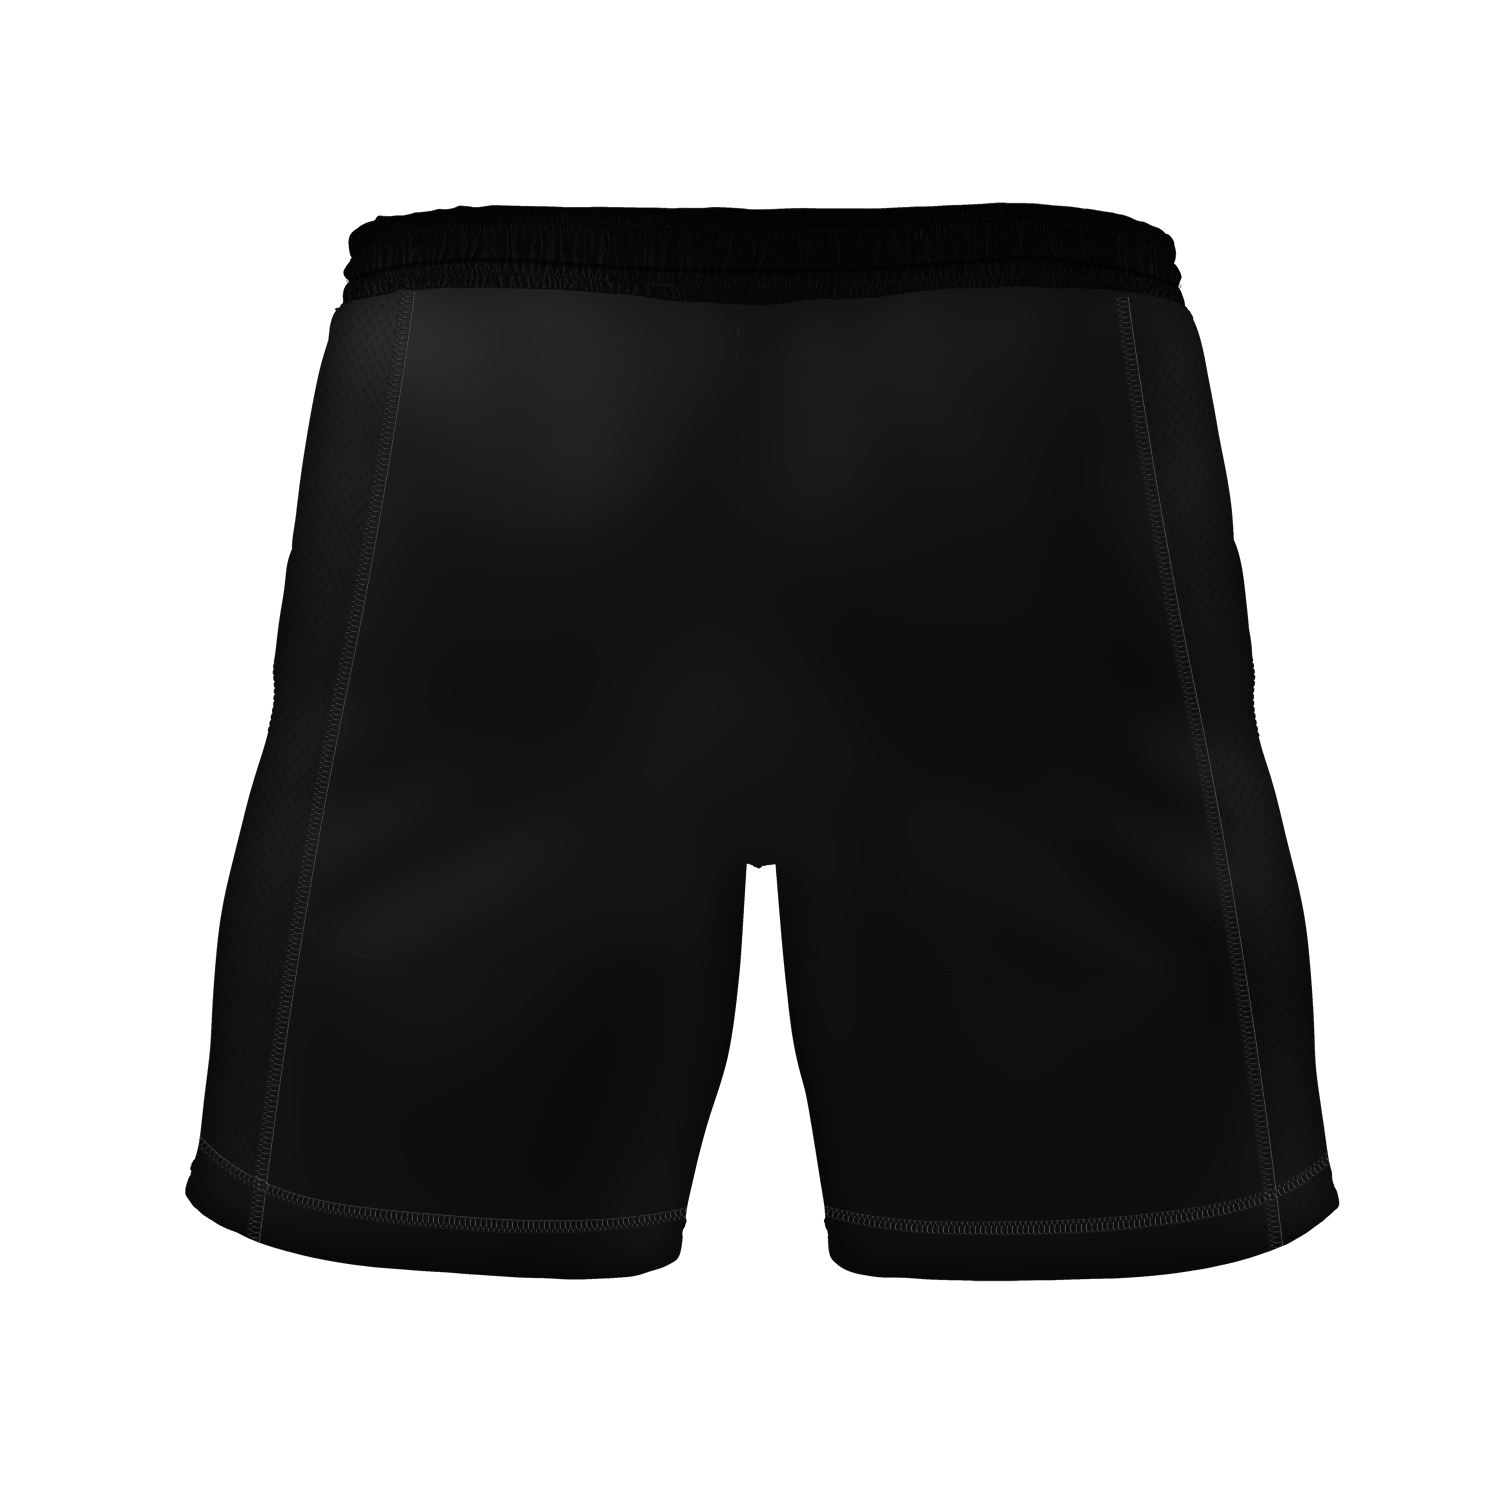 Tsunami JJ men's 7" fight shorts Ranked, black